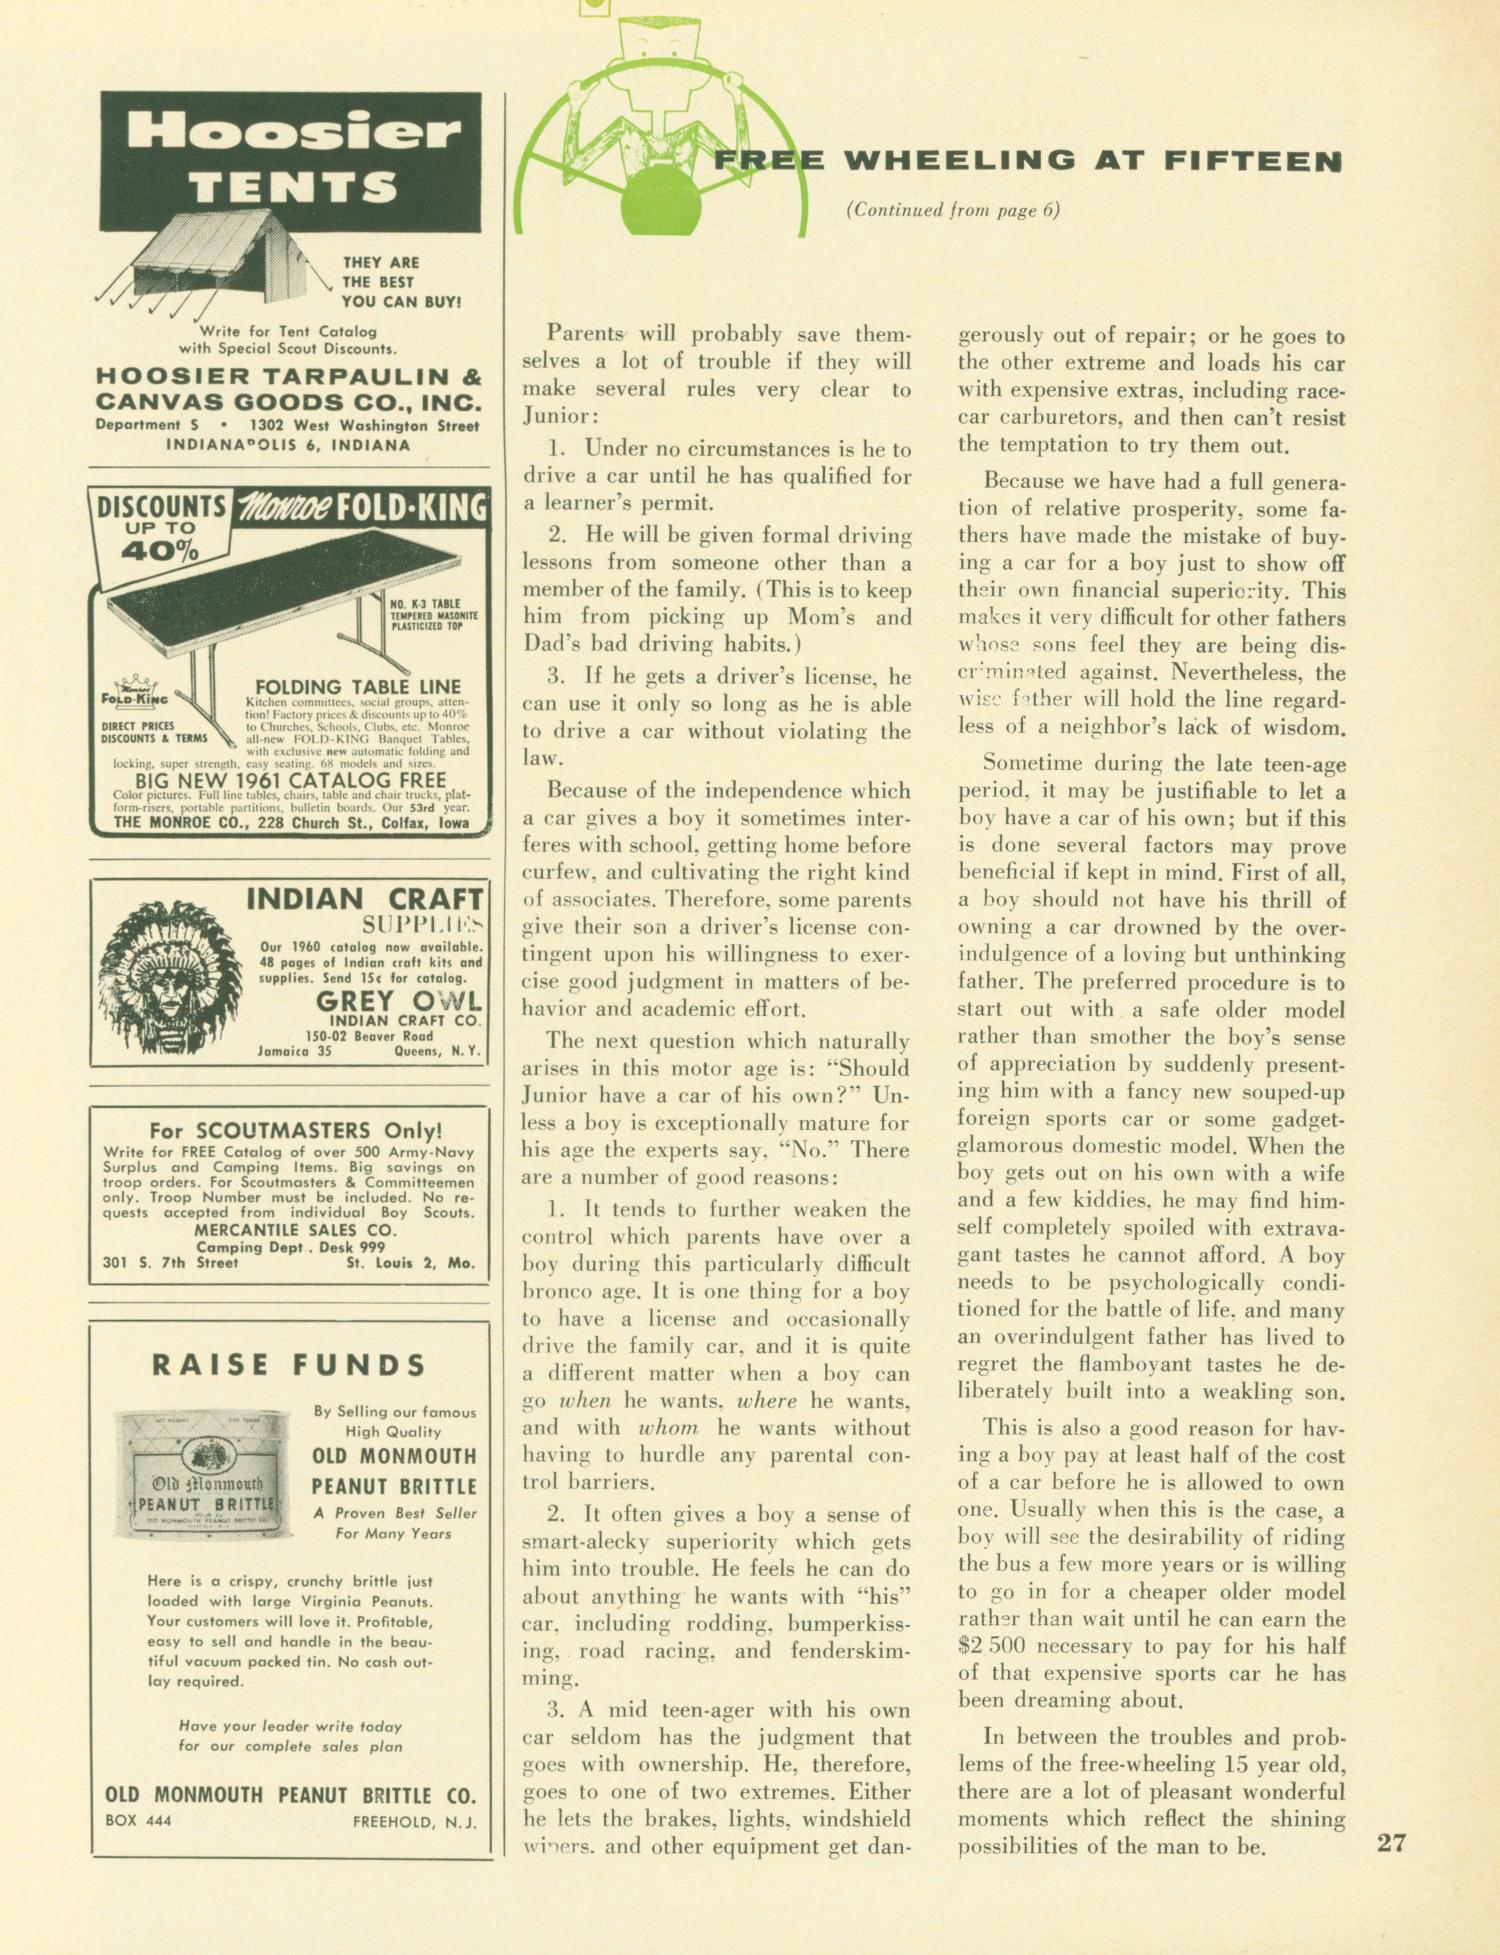 Scouting, Volume 48, Number 8, November 1960
                                                
                                                    27
                                                